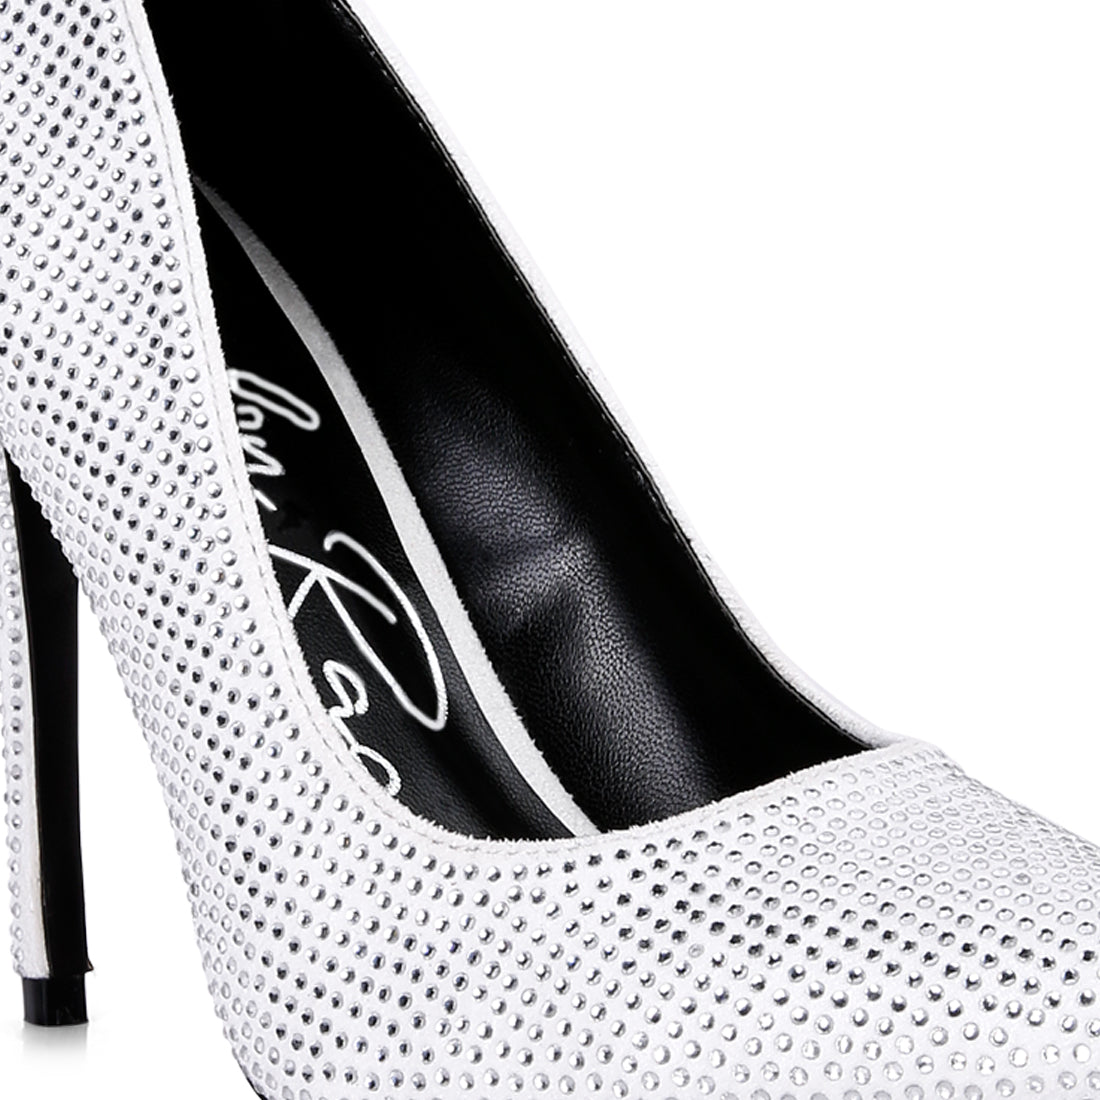 diamante high heeled pumps#color_white